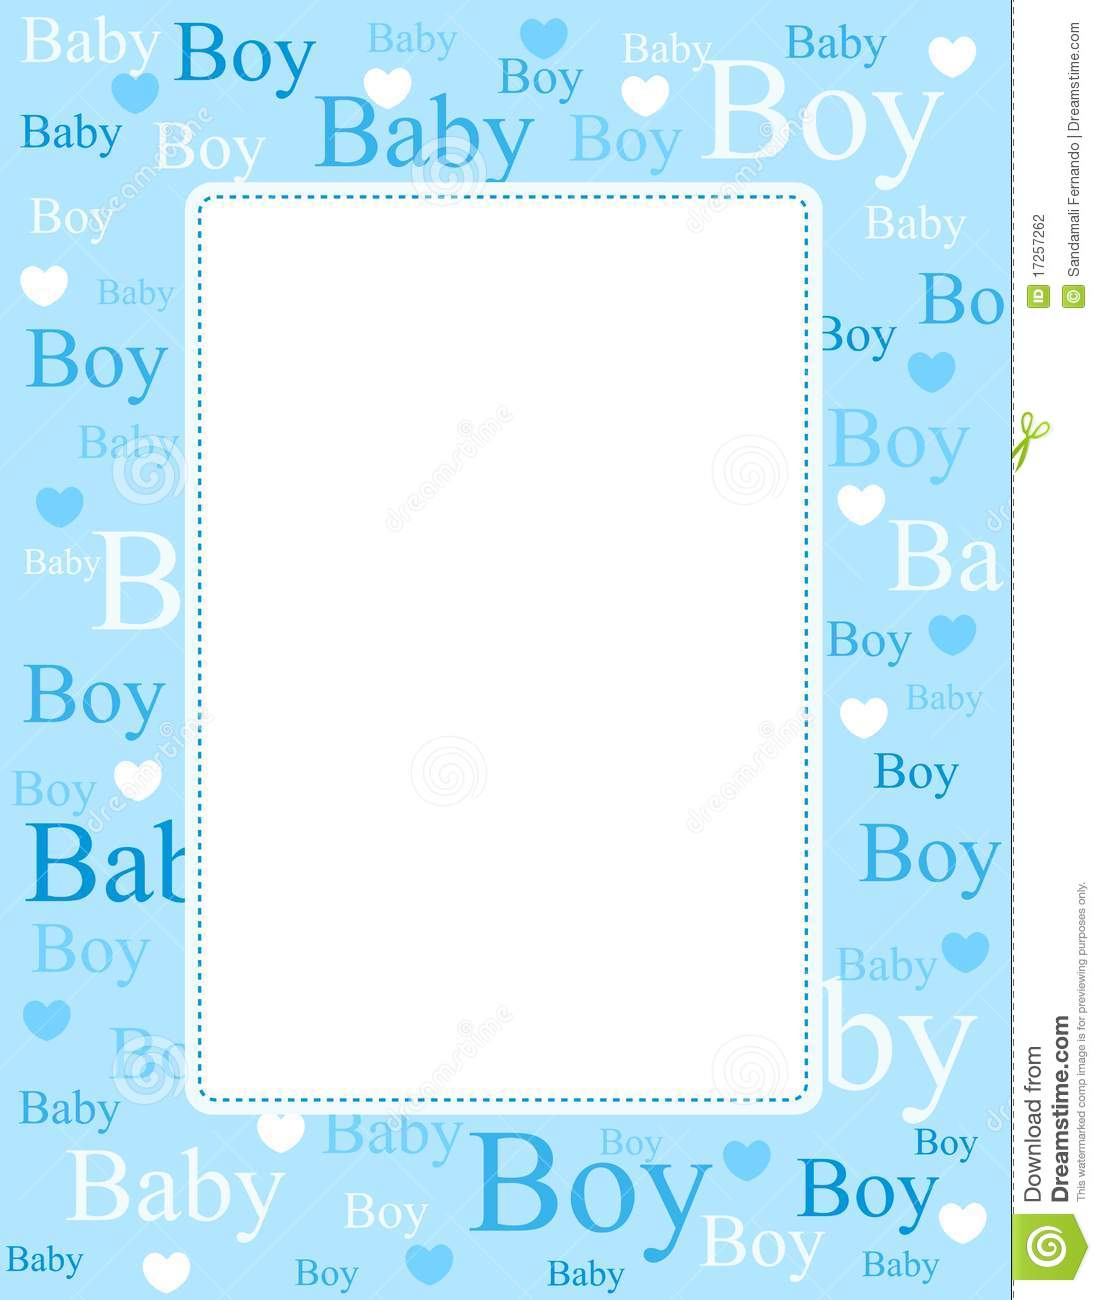 free baby boy clip art borders - photo #41